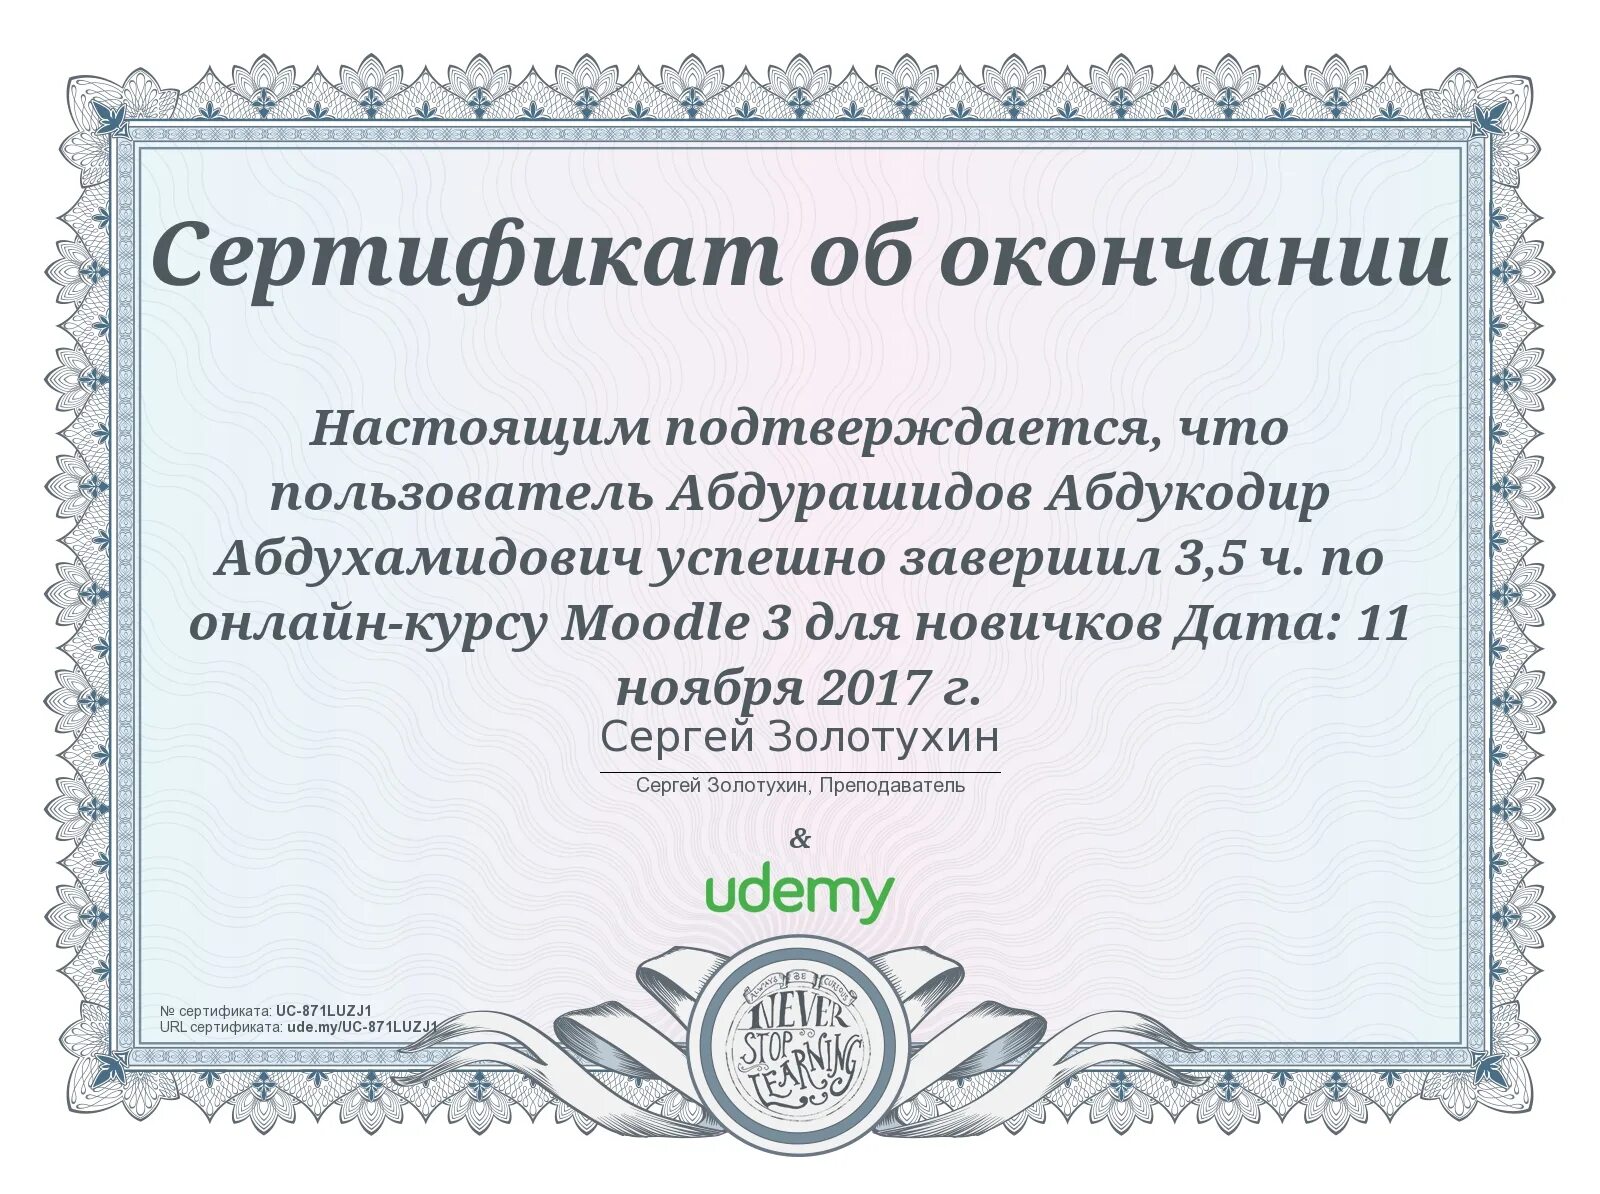 Url certificate. Сертификат Udemy. Сертификат юдеми. Udemy сертификат об окончании. Критическое мышление сертификат об окончании курса.